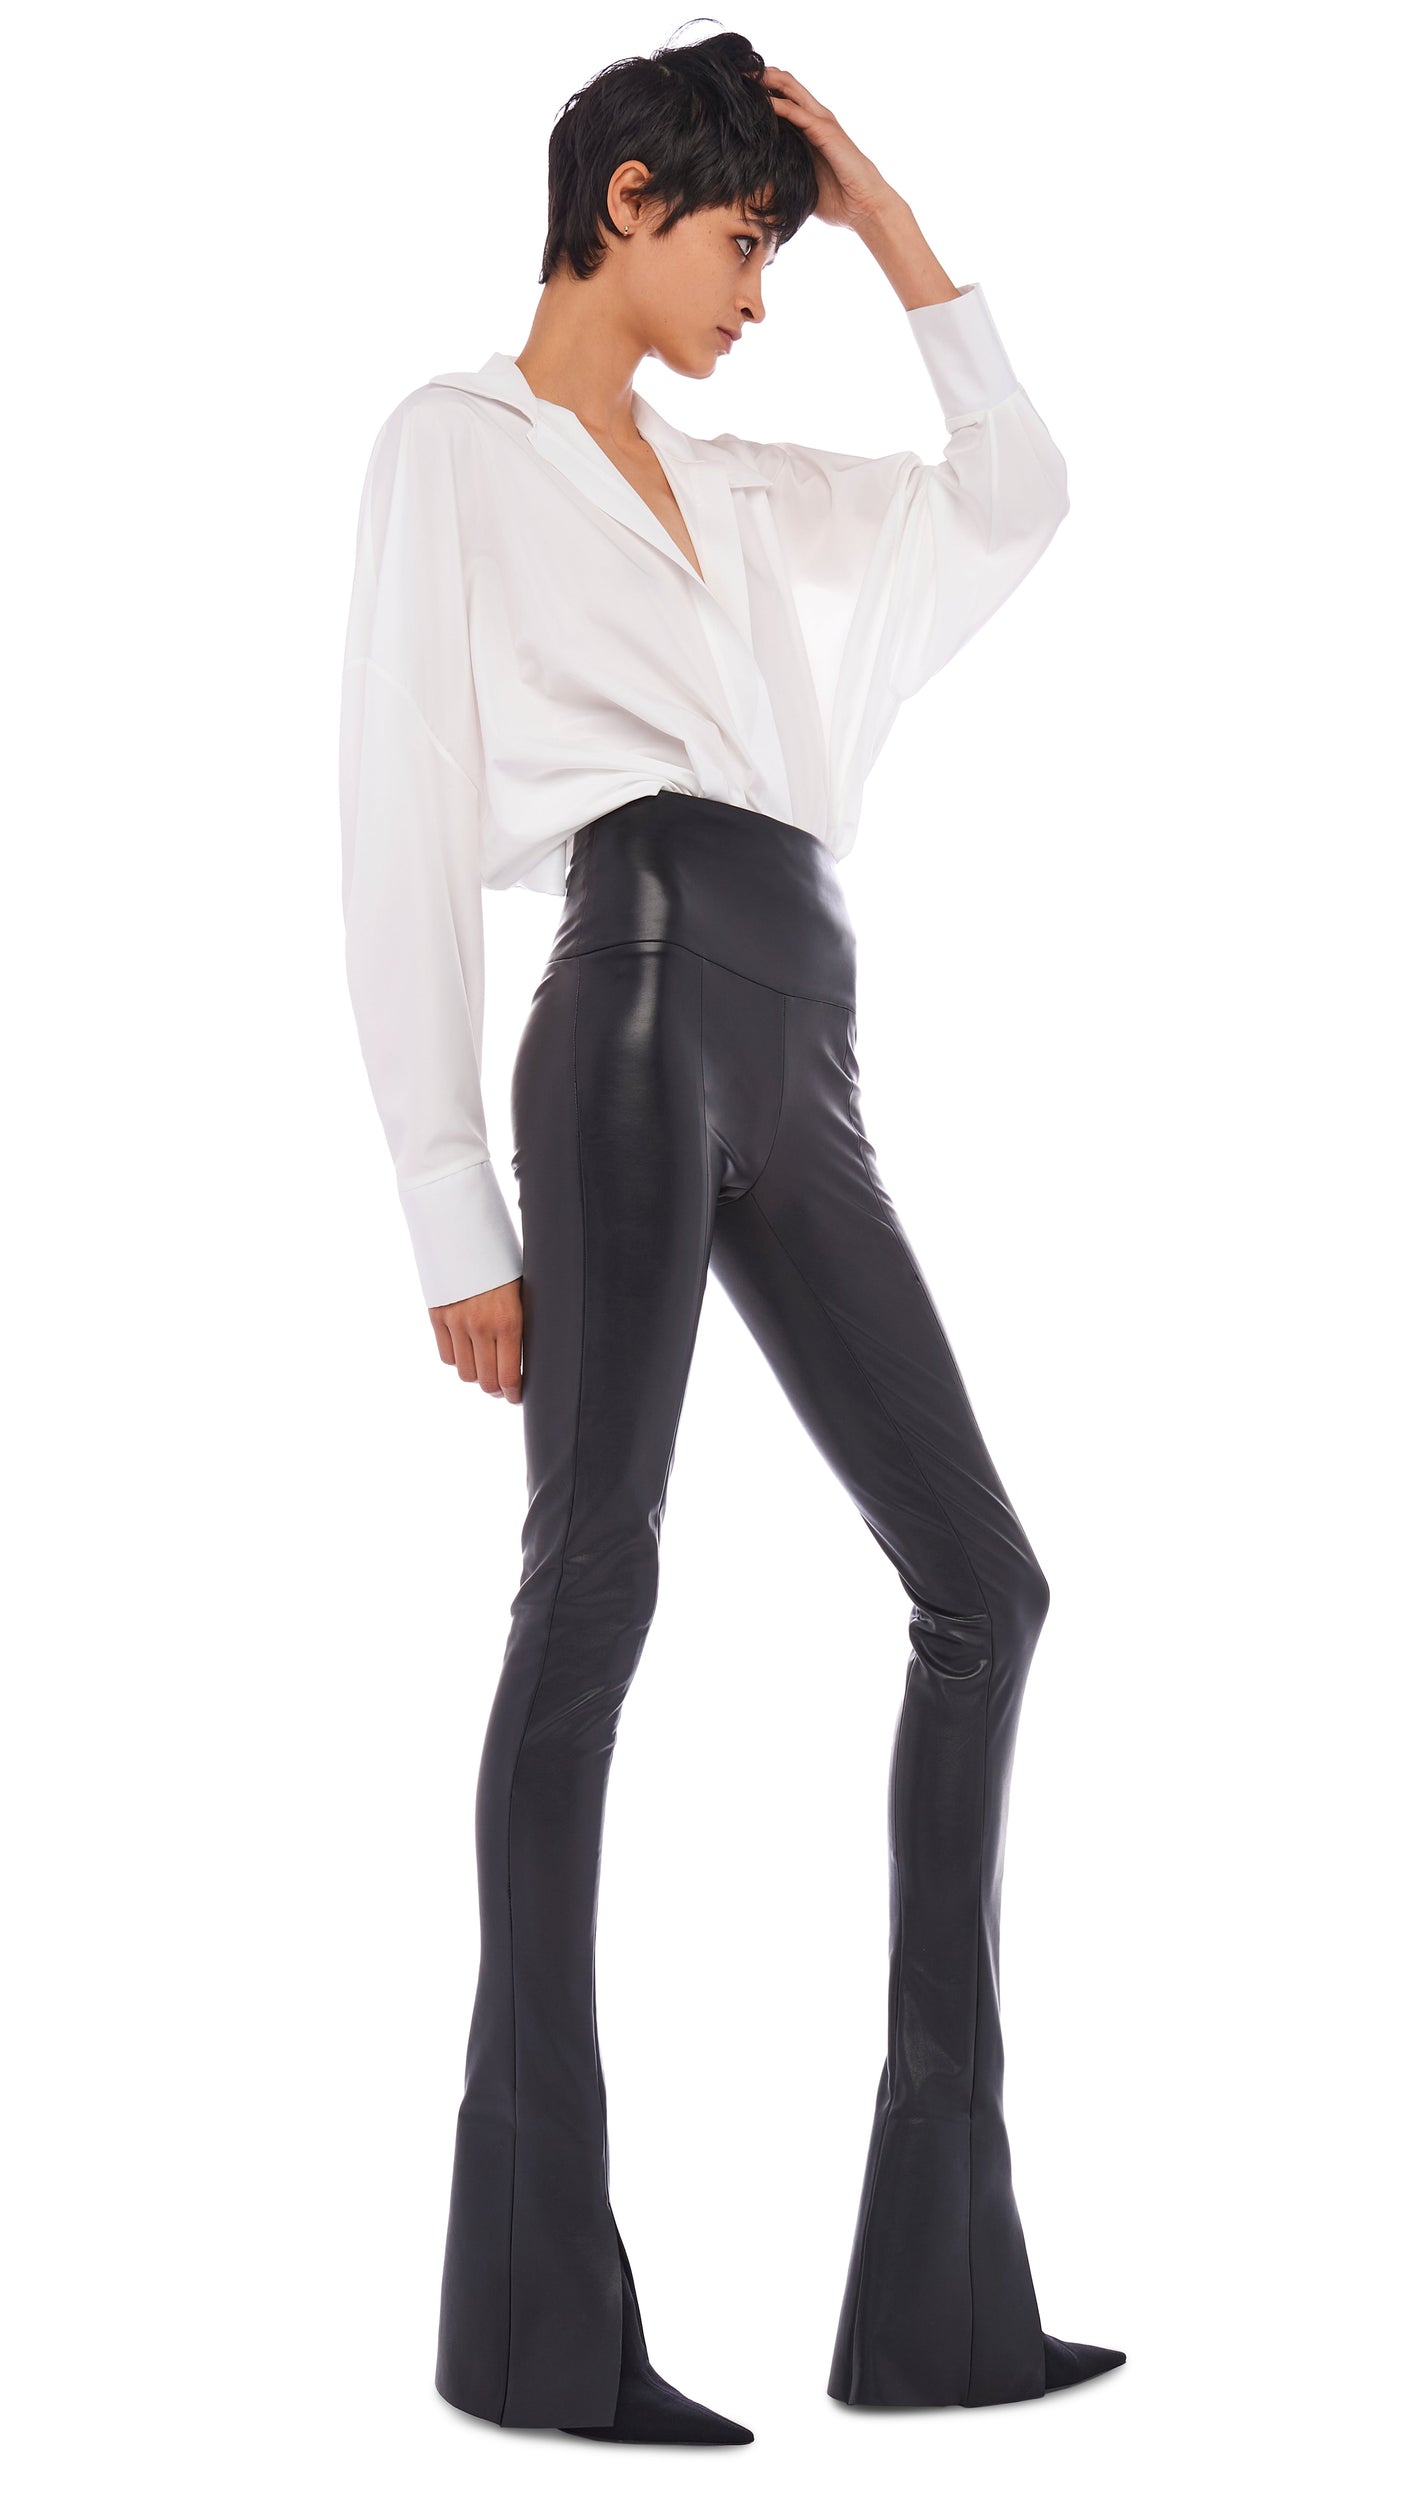 NEW Norma Kamali Women's Spat Slit Front Pants - Black - Size XL